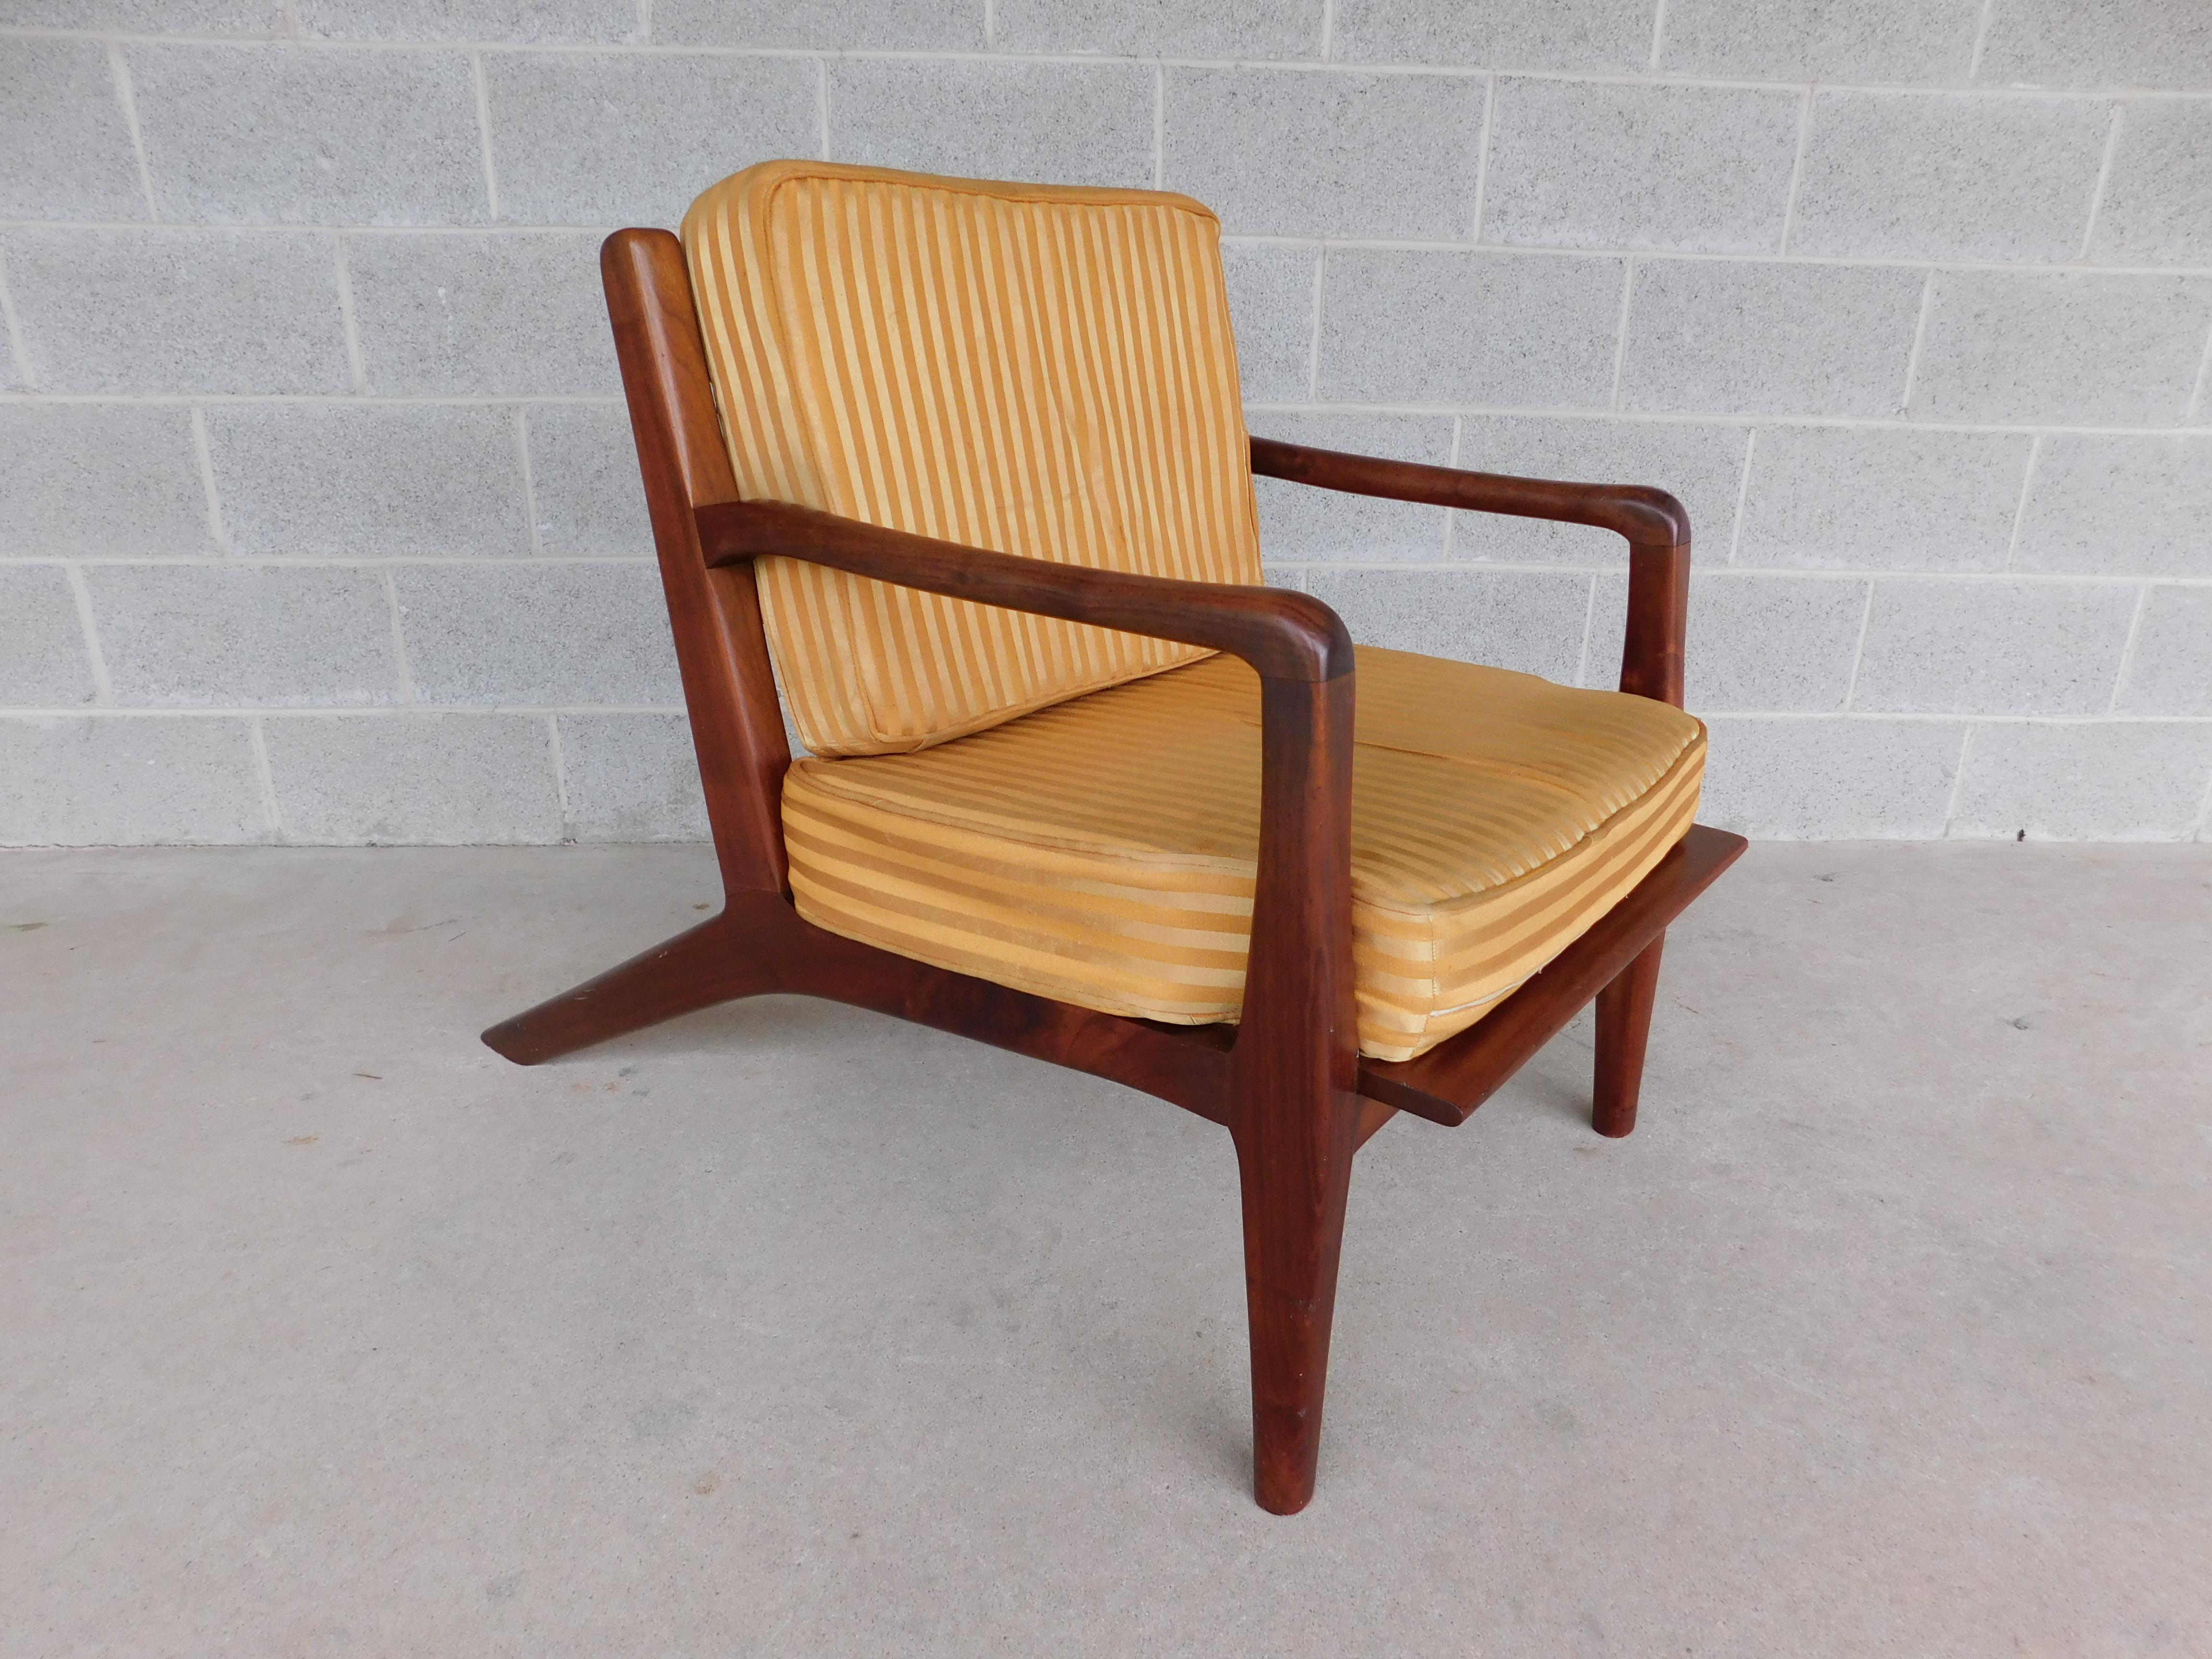 Vintage Teak Midcentury Lounge Chair Attributed to Hans Wegner For Sale 2